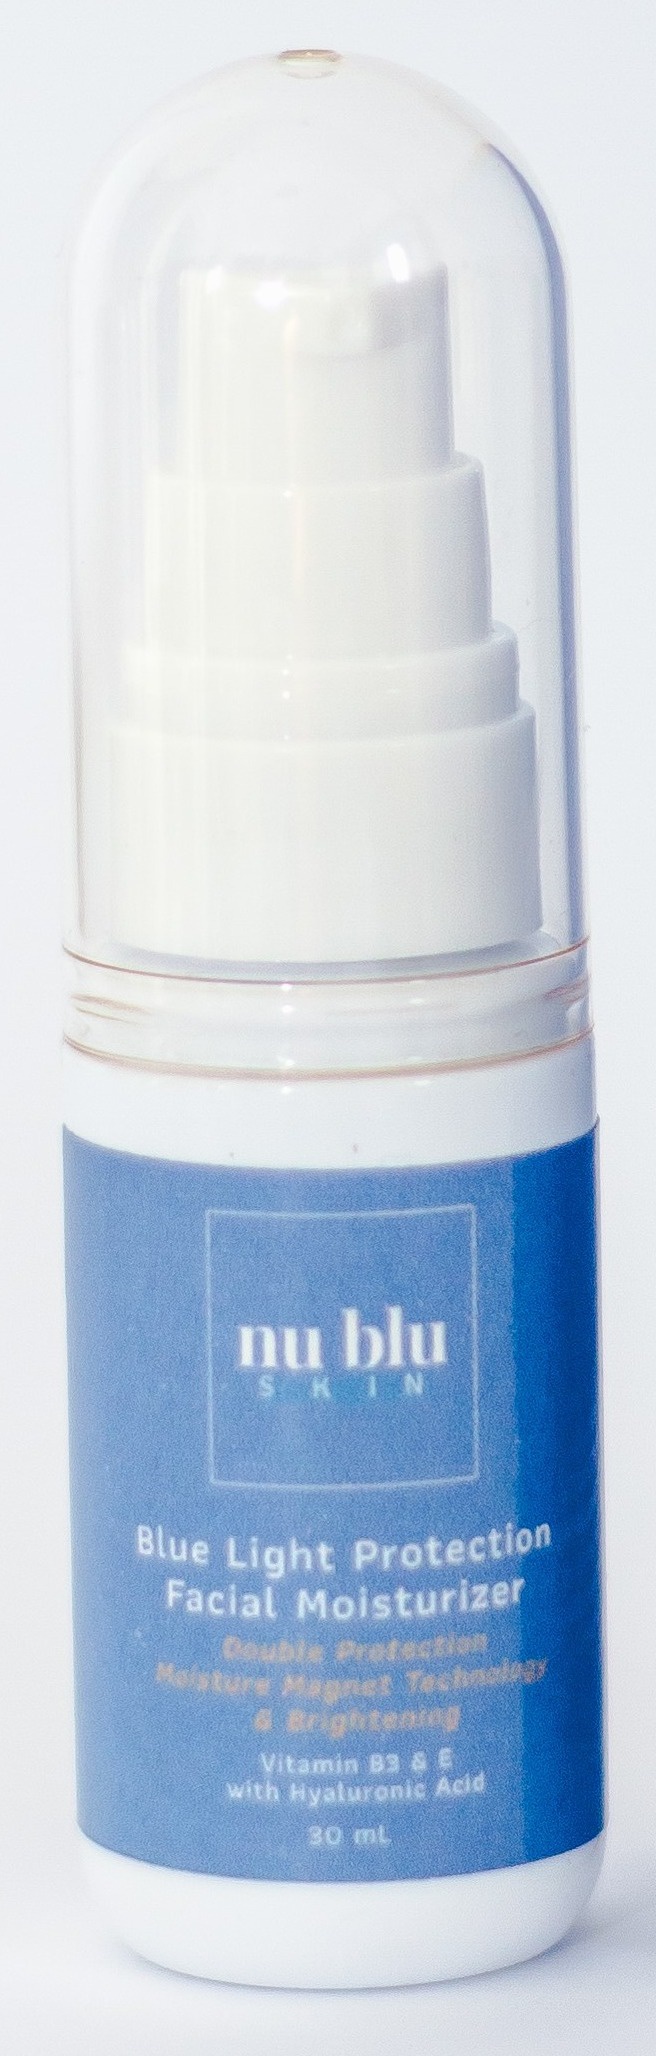 Nu Blu Skin Blue Light Protection Facial Moisturizer